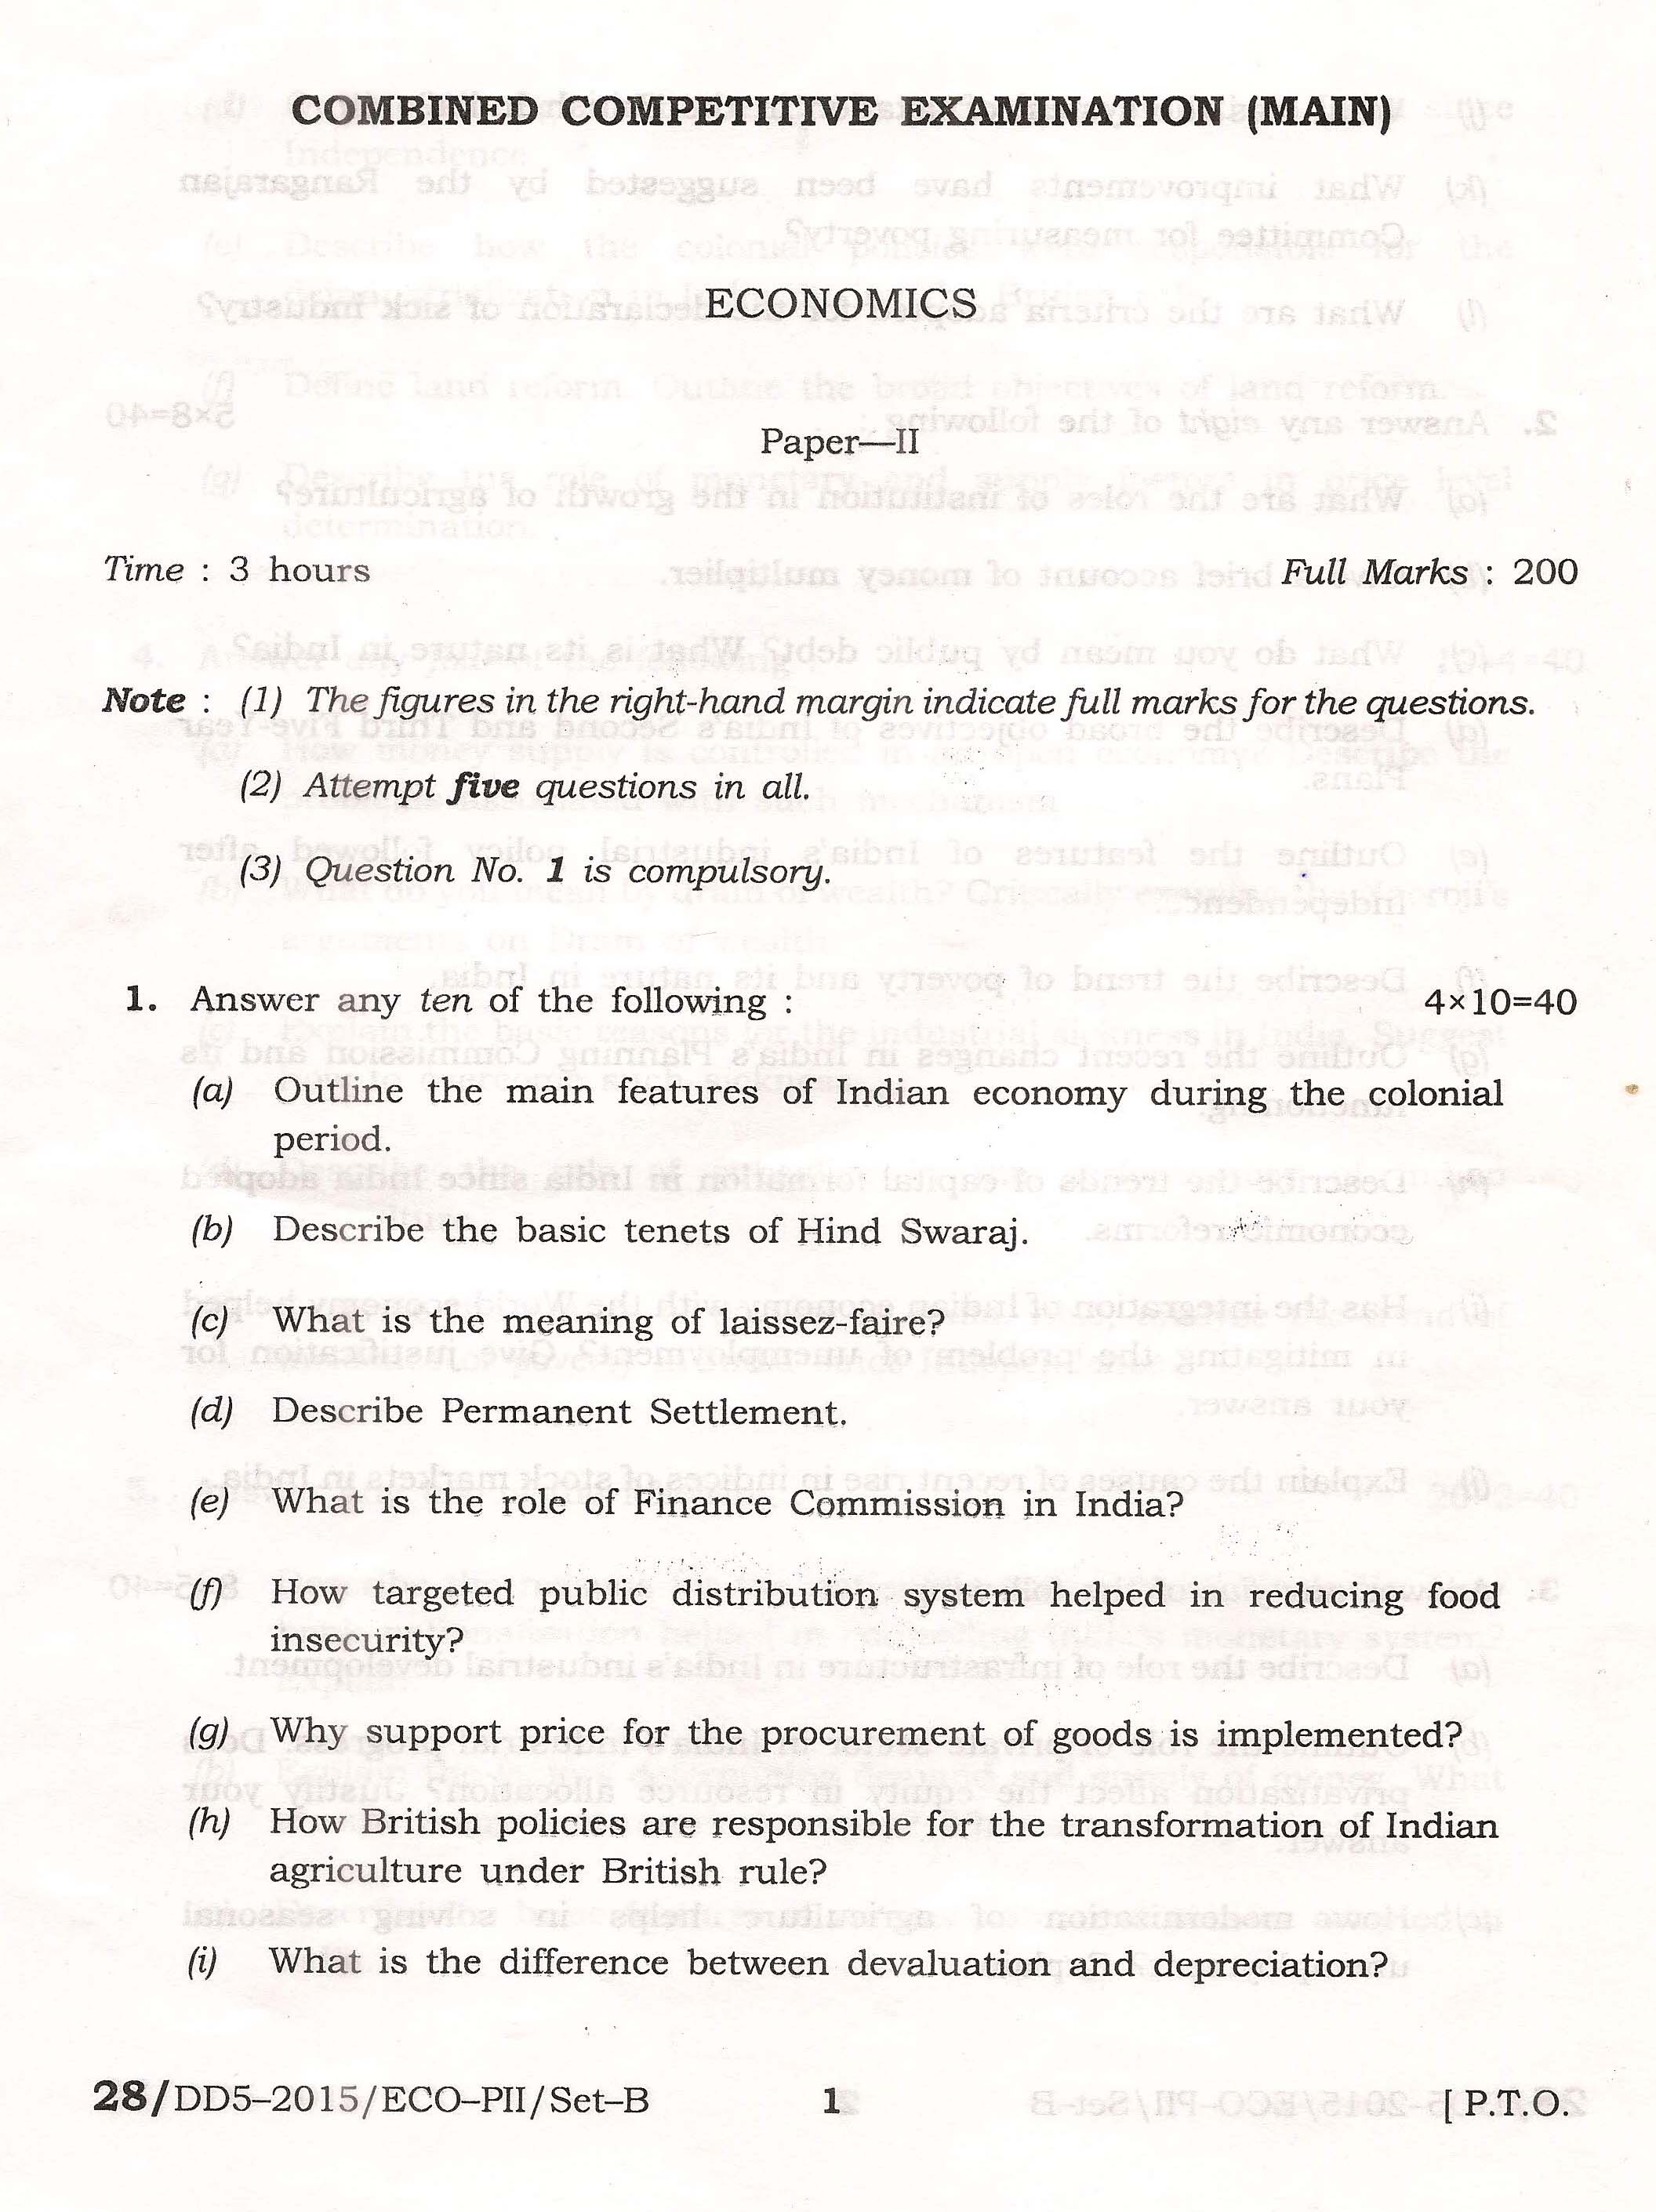 APPSC Combined Competitive Main Exam 2015 Economics Paper II 1